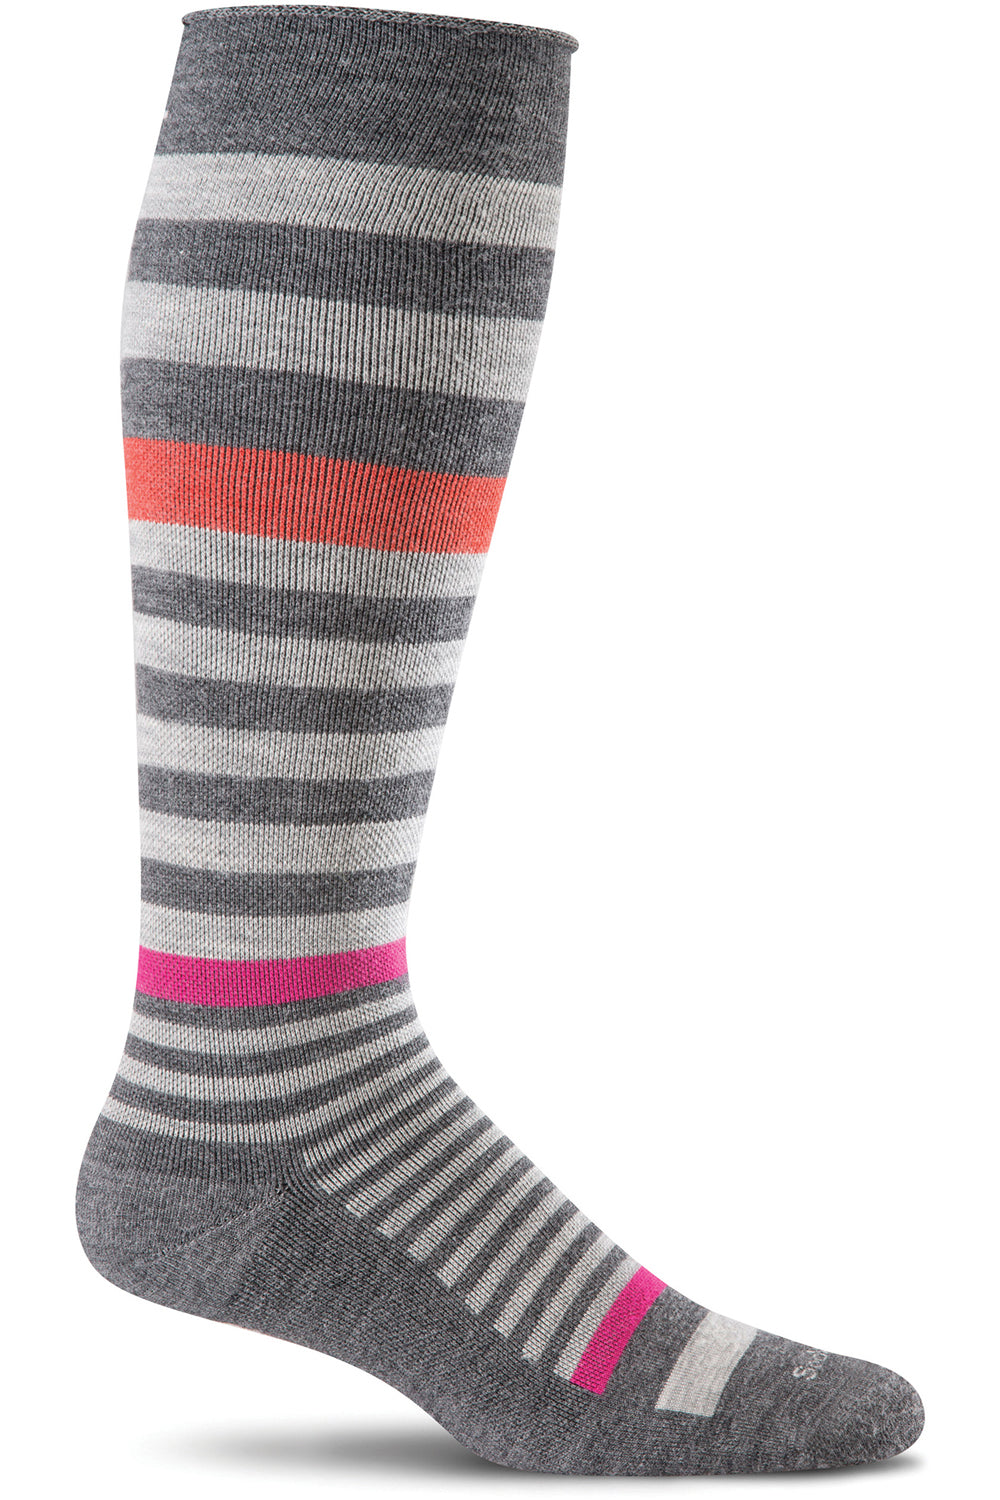 Sockwell Women's Orbital Stripe Sock in Charcoal color from the side